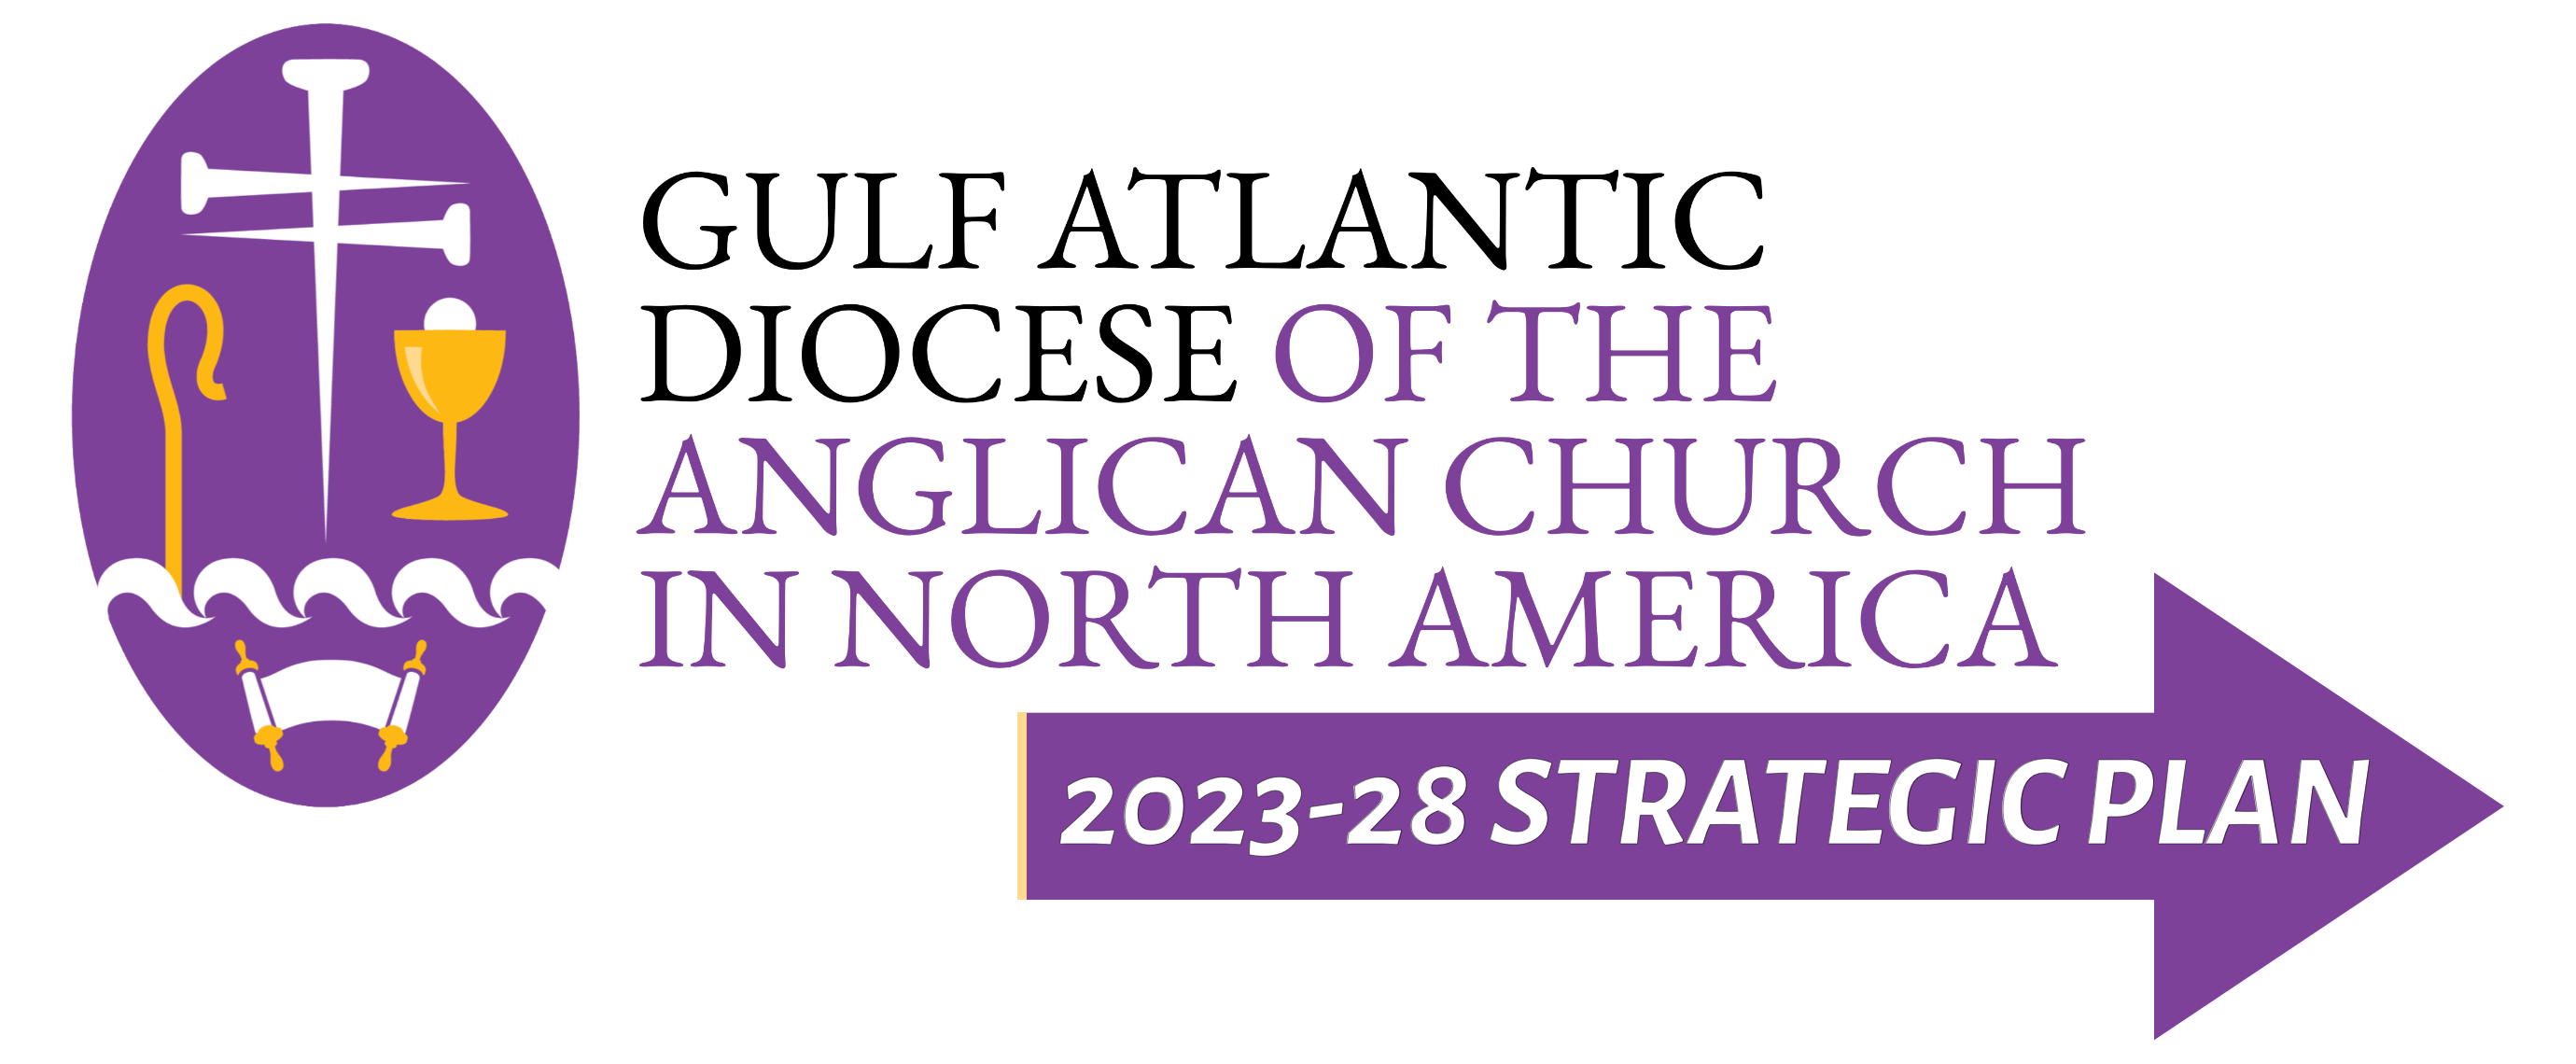 Gulf Atlantic Diocese 2023-2028 Strategic Plan logo